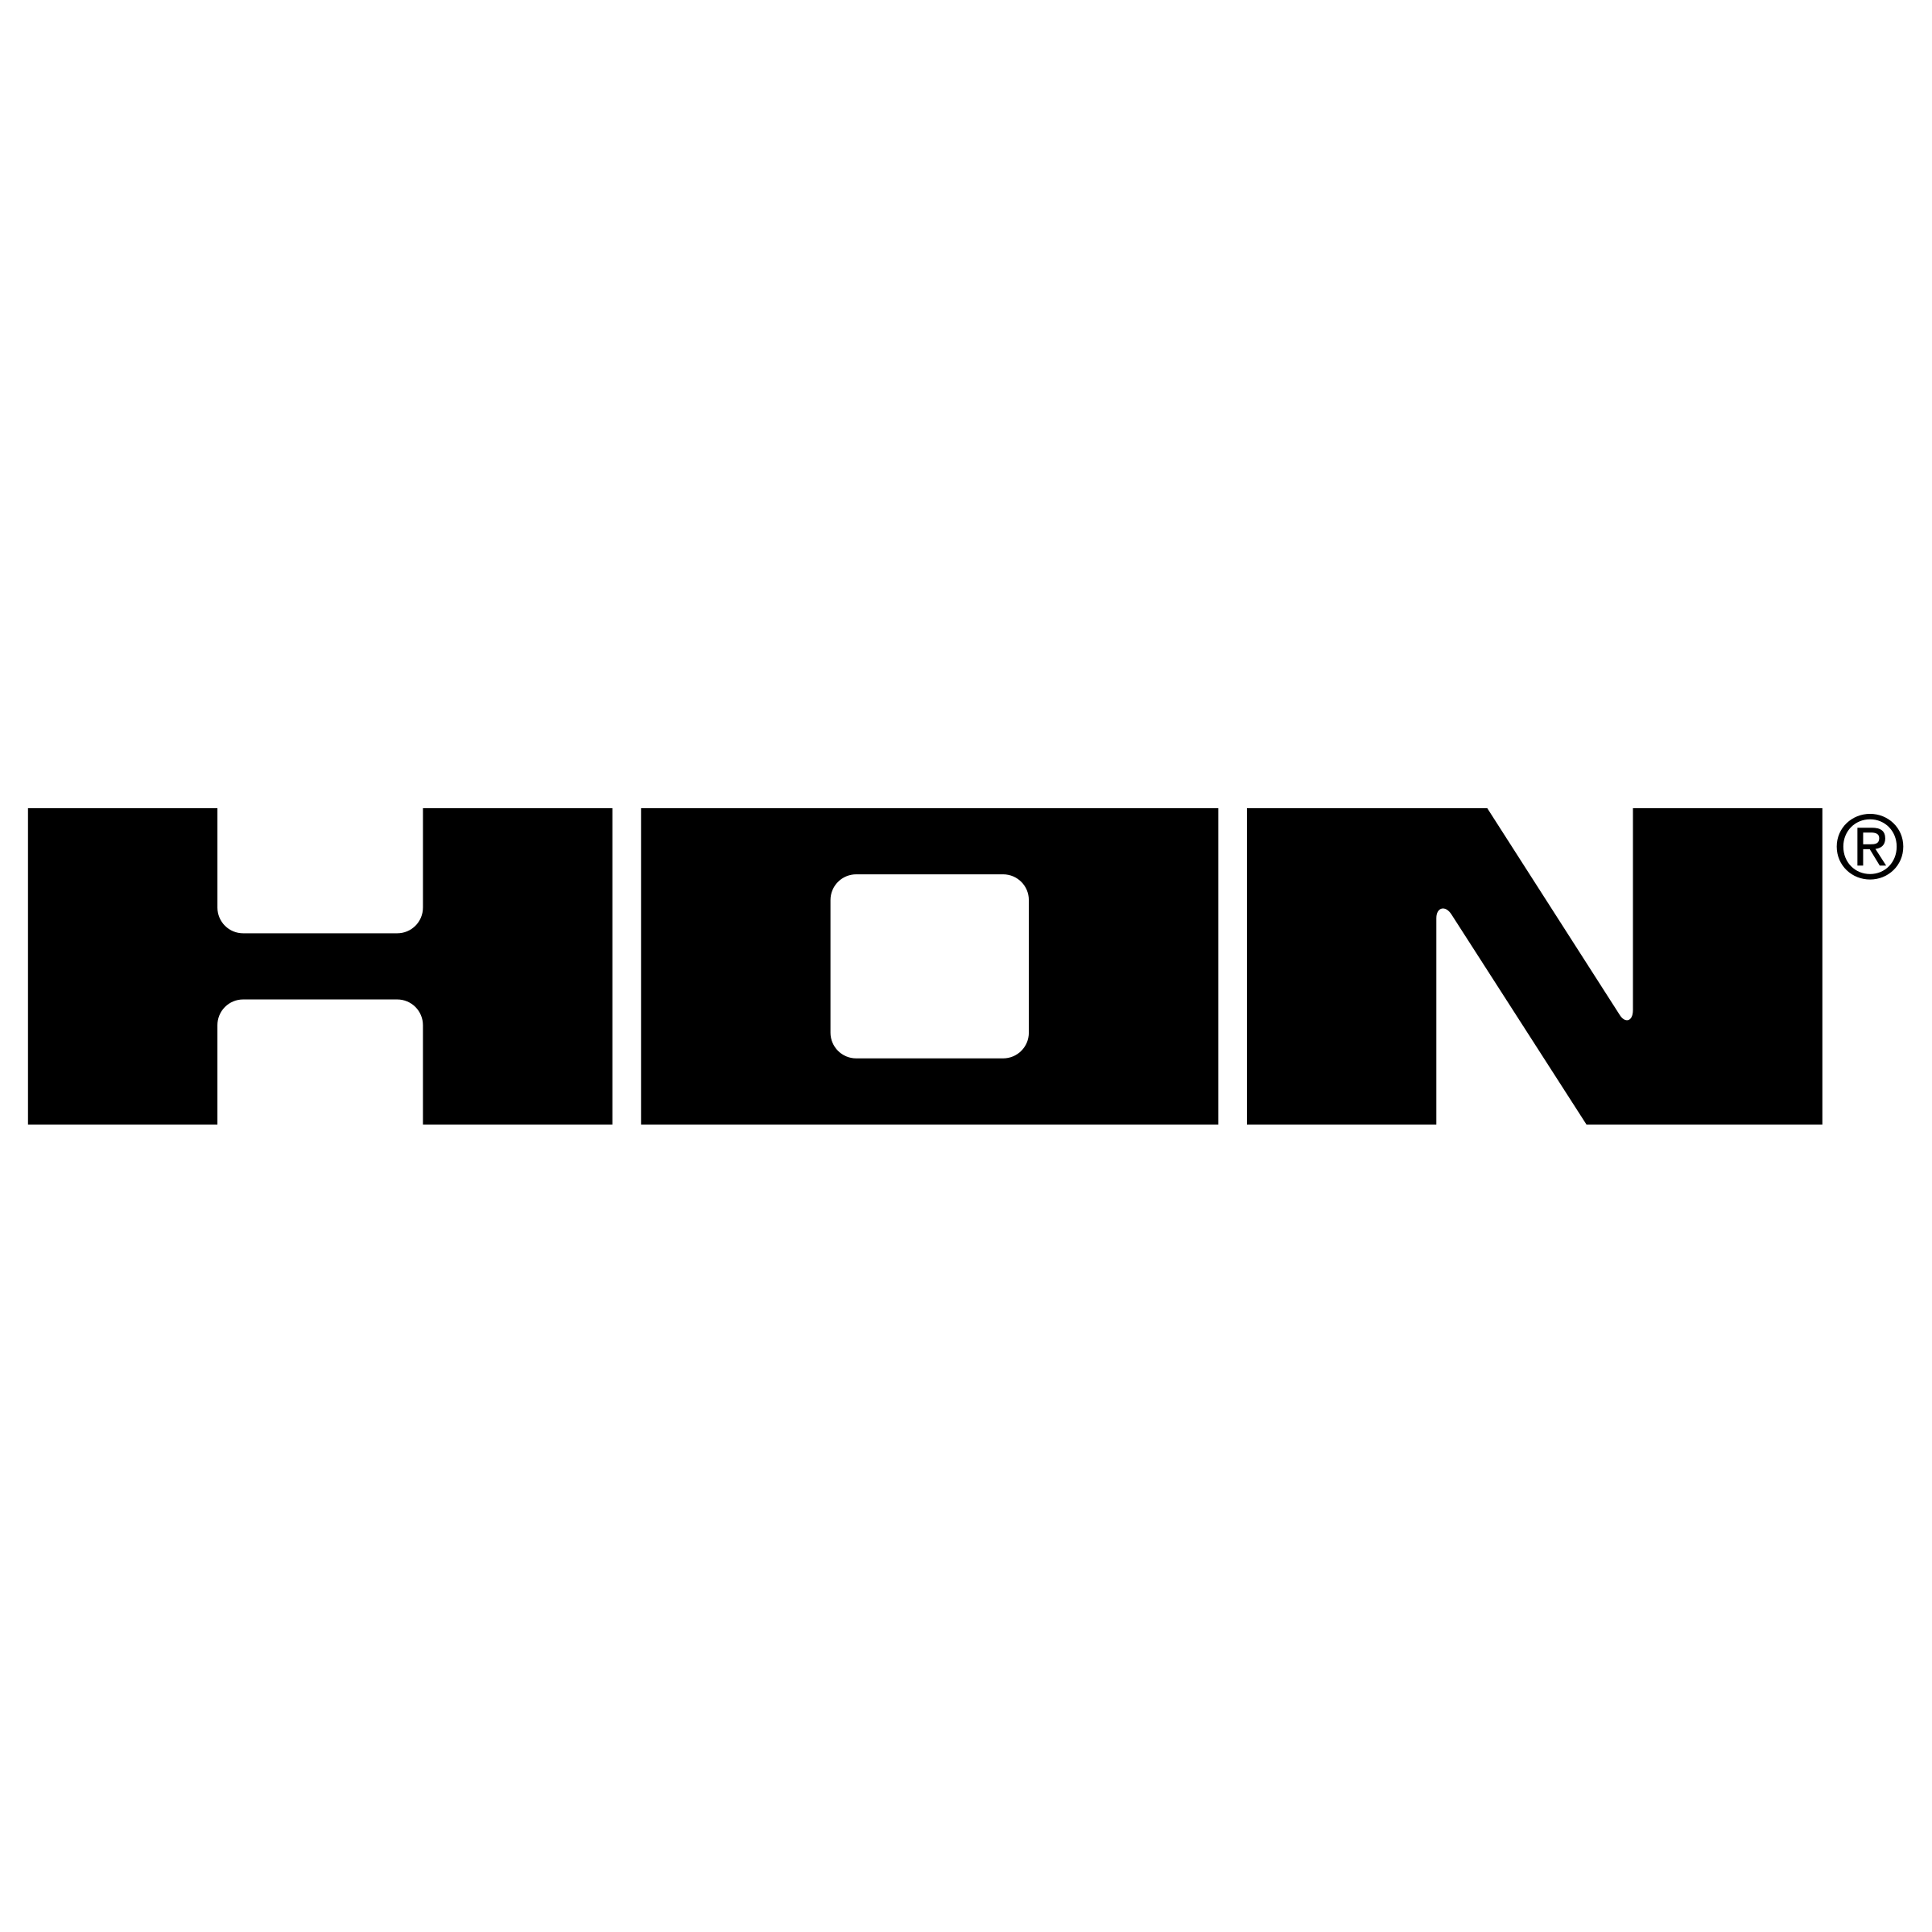 Hon Logo - HON Logo PNG Transparent & SVG Vector - Freebie Supply